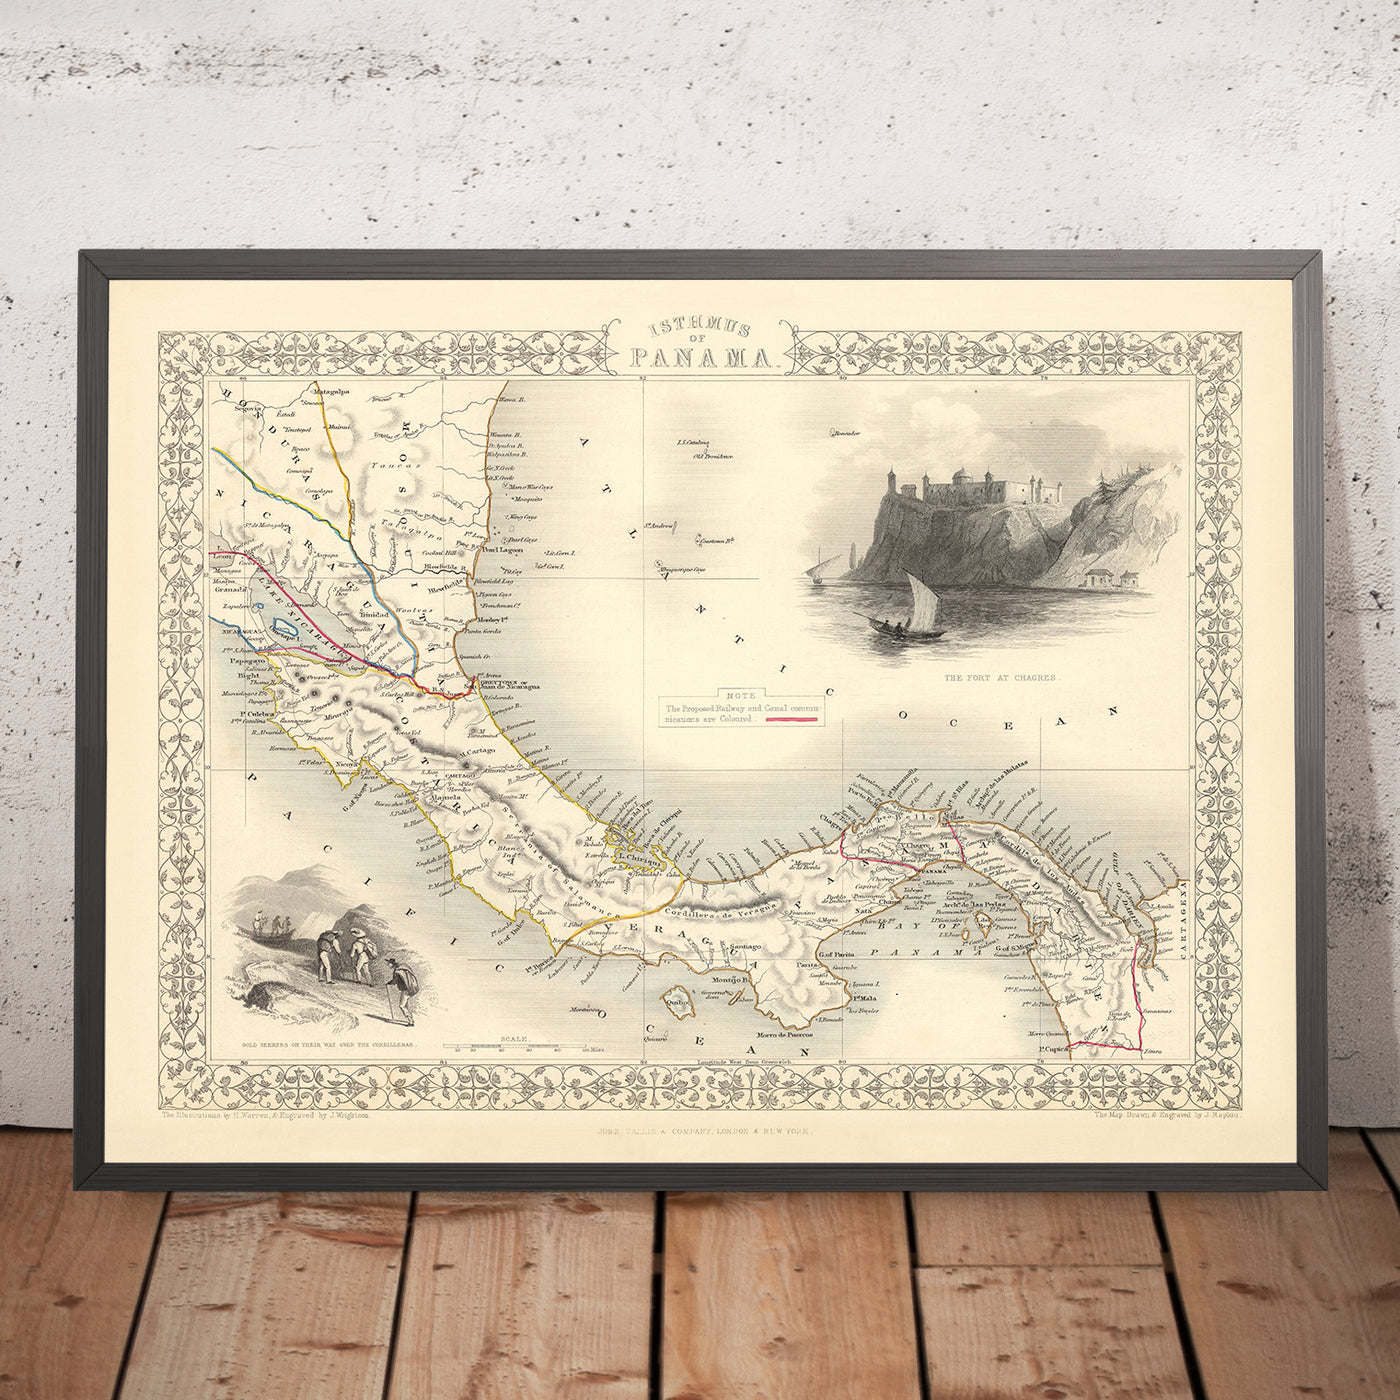 Antiguo mapa detallado de Panamá por Tallis, 1851: Canal de Panamá, Océano Pacífico, Mar Caribe, Río Chagres, Cordillera de San Blas